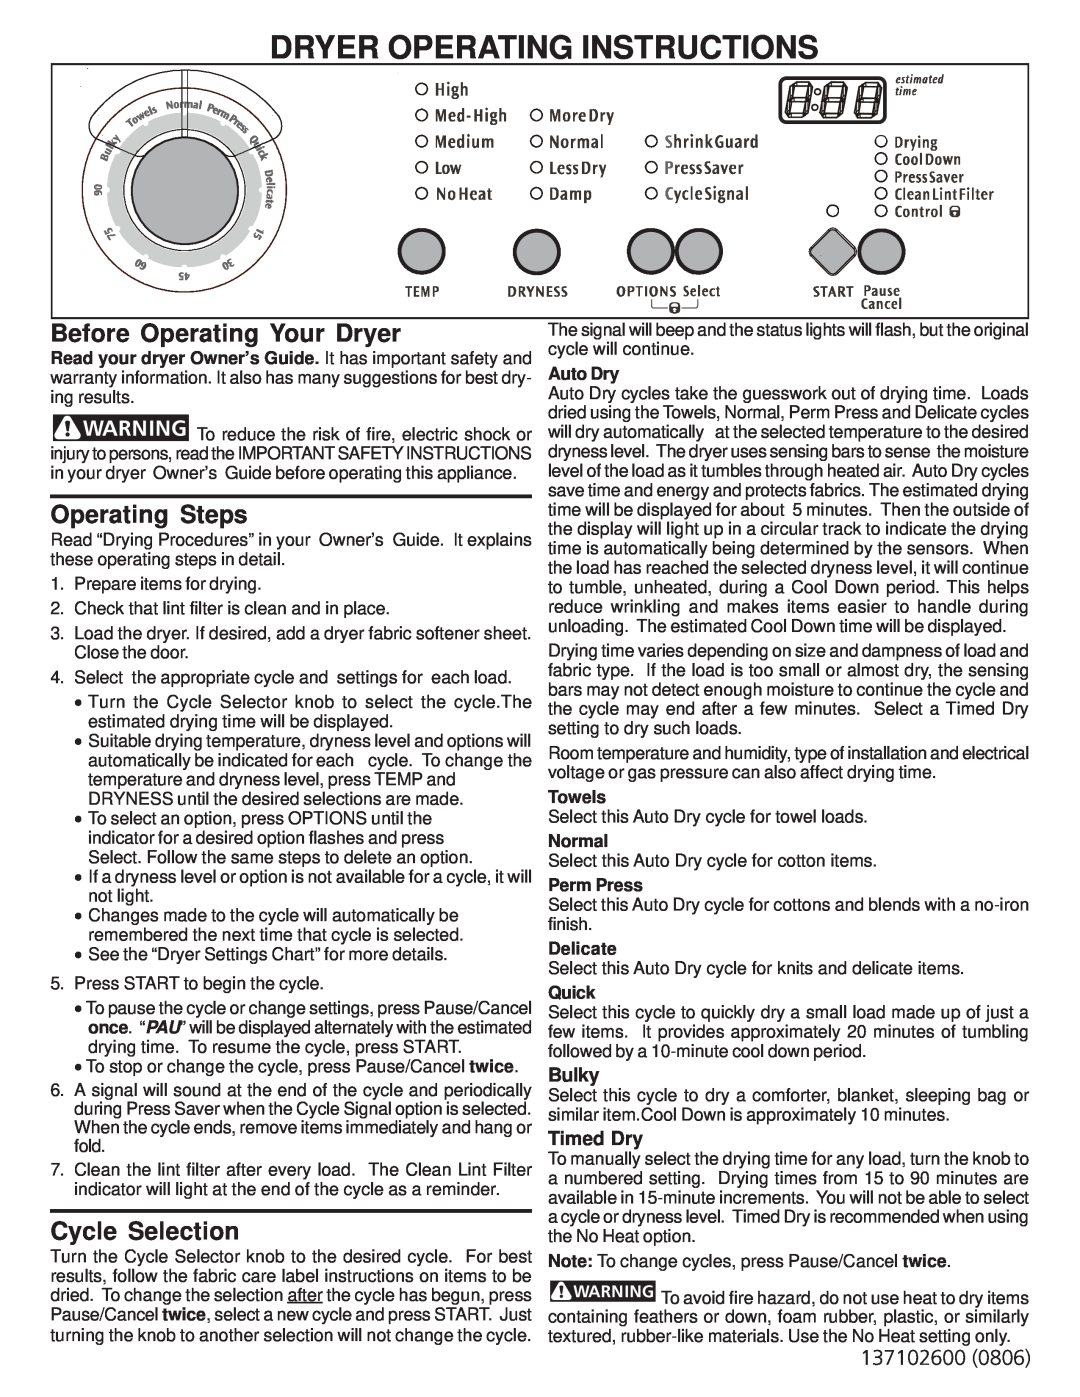 Frigidaire 137102600 operating instructions Dryer Operating Instructions, Before Operating Your Dryer, Operating Steps 